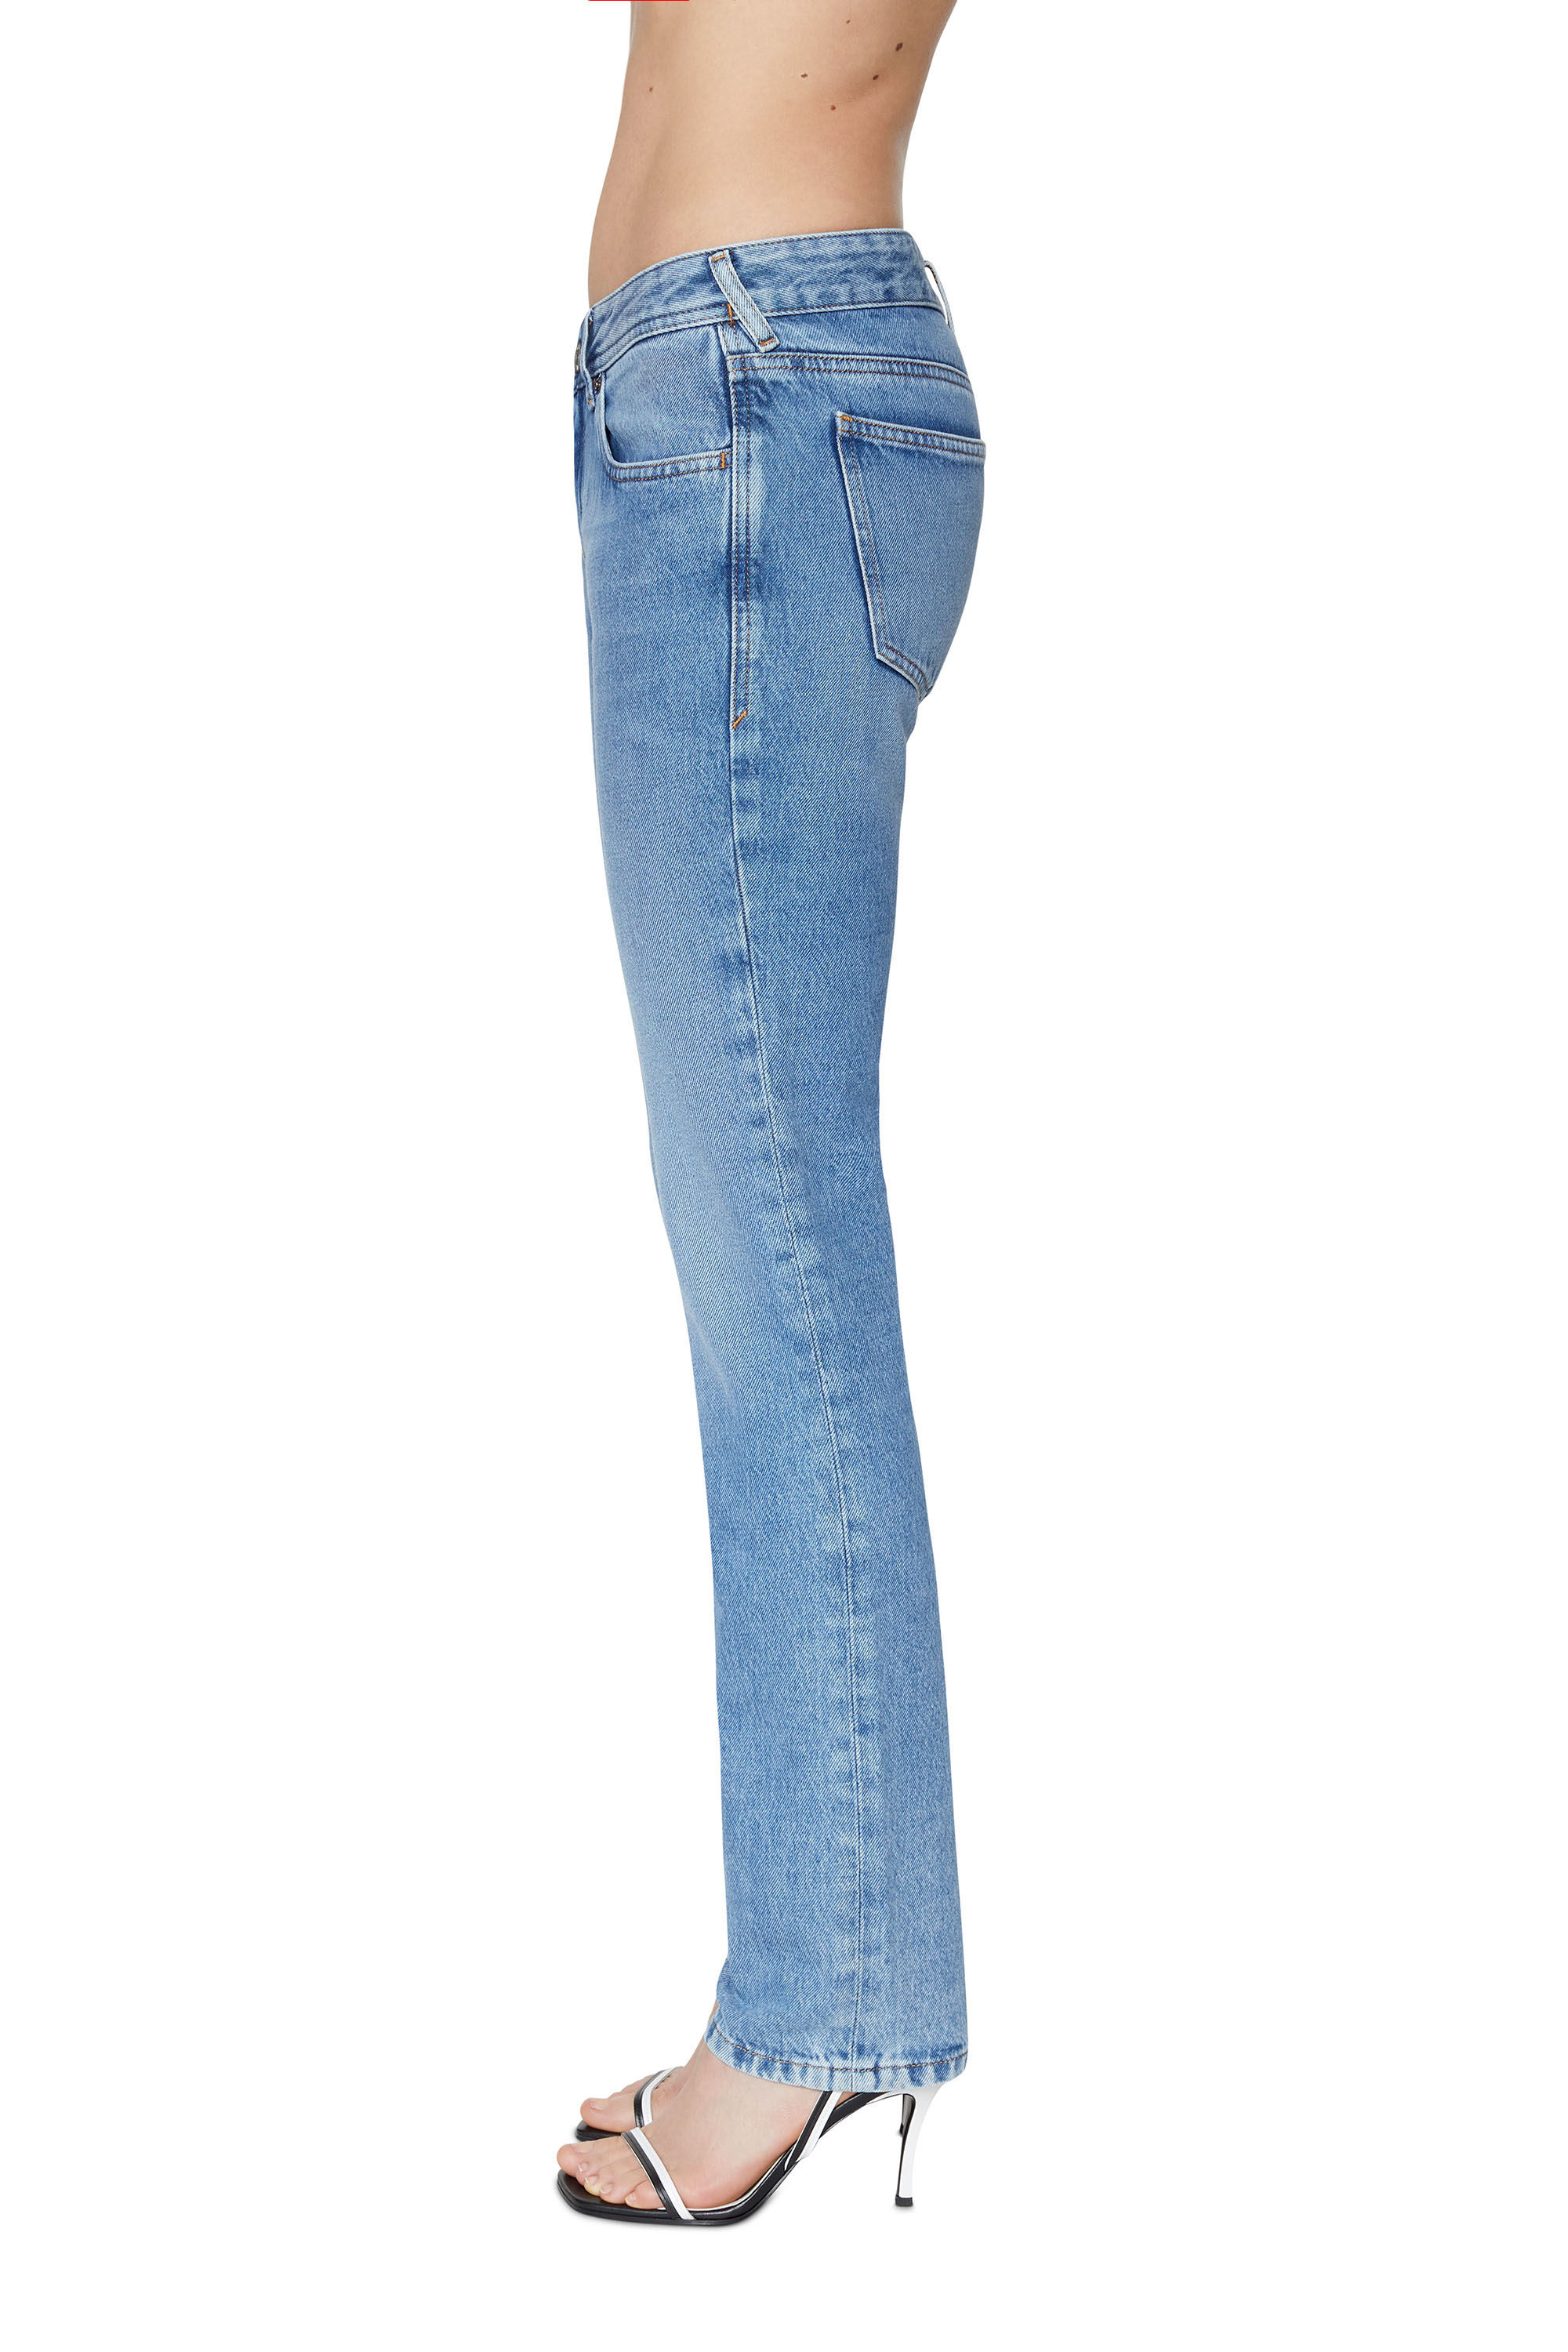 MODA DONNA Jeans Strappato sconto 91% NoName Pantaloncini jeans Blu navy L 